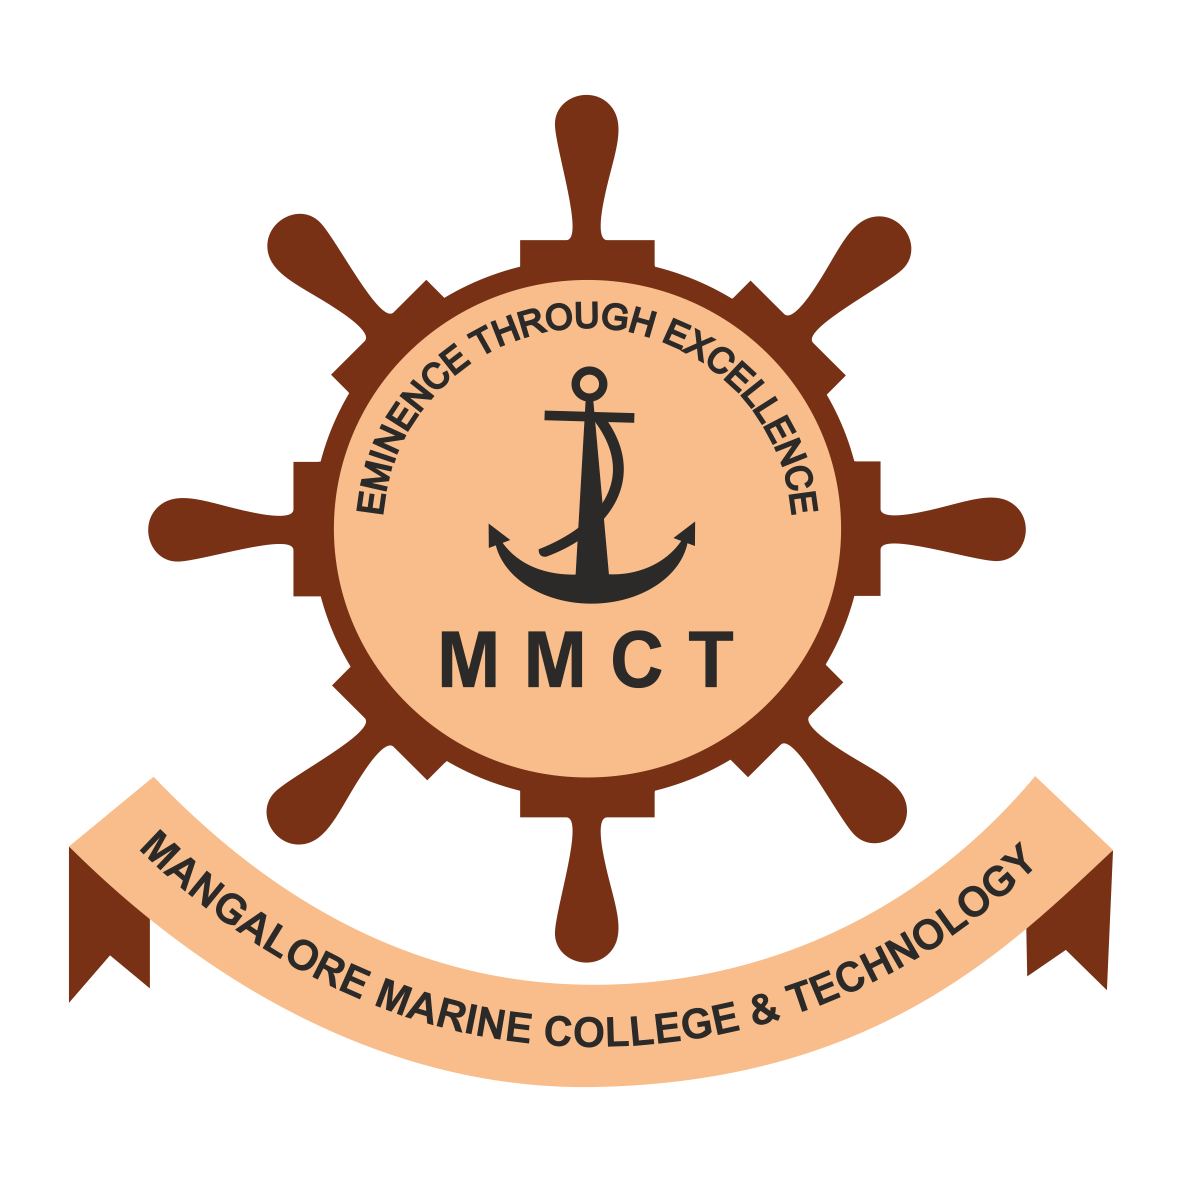 Mangalore Marine College & Technology